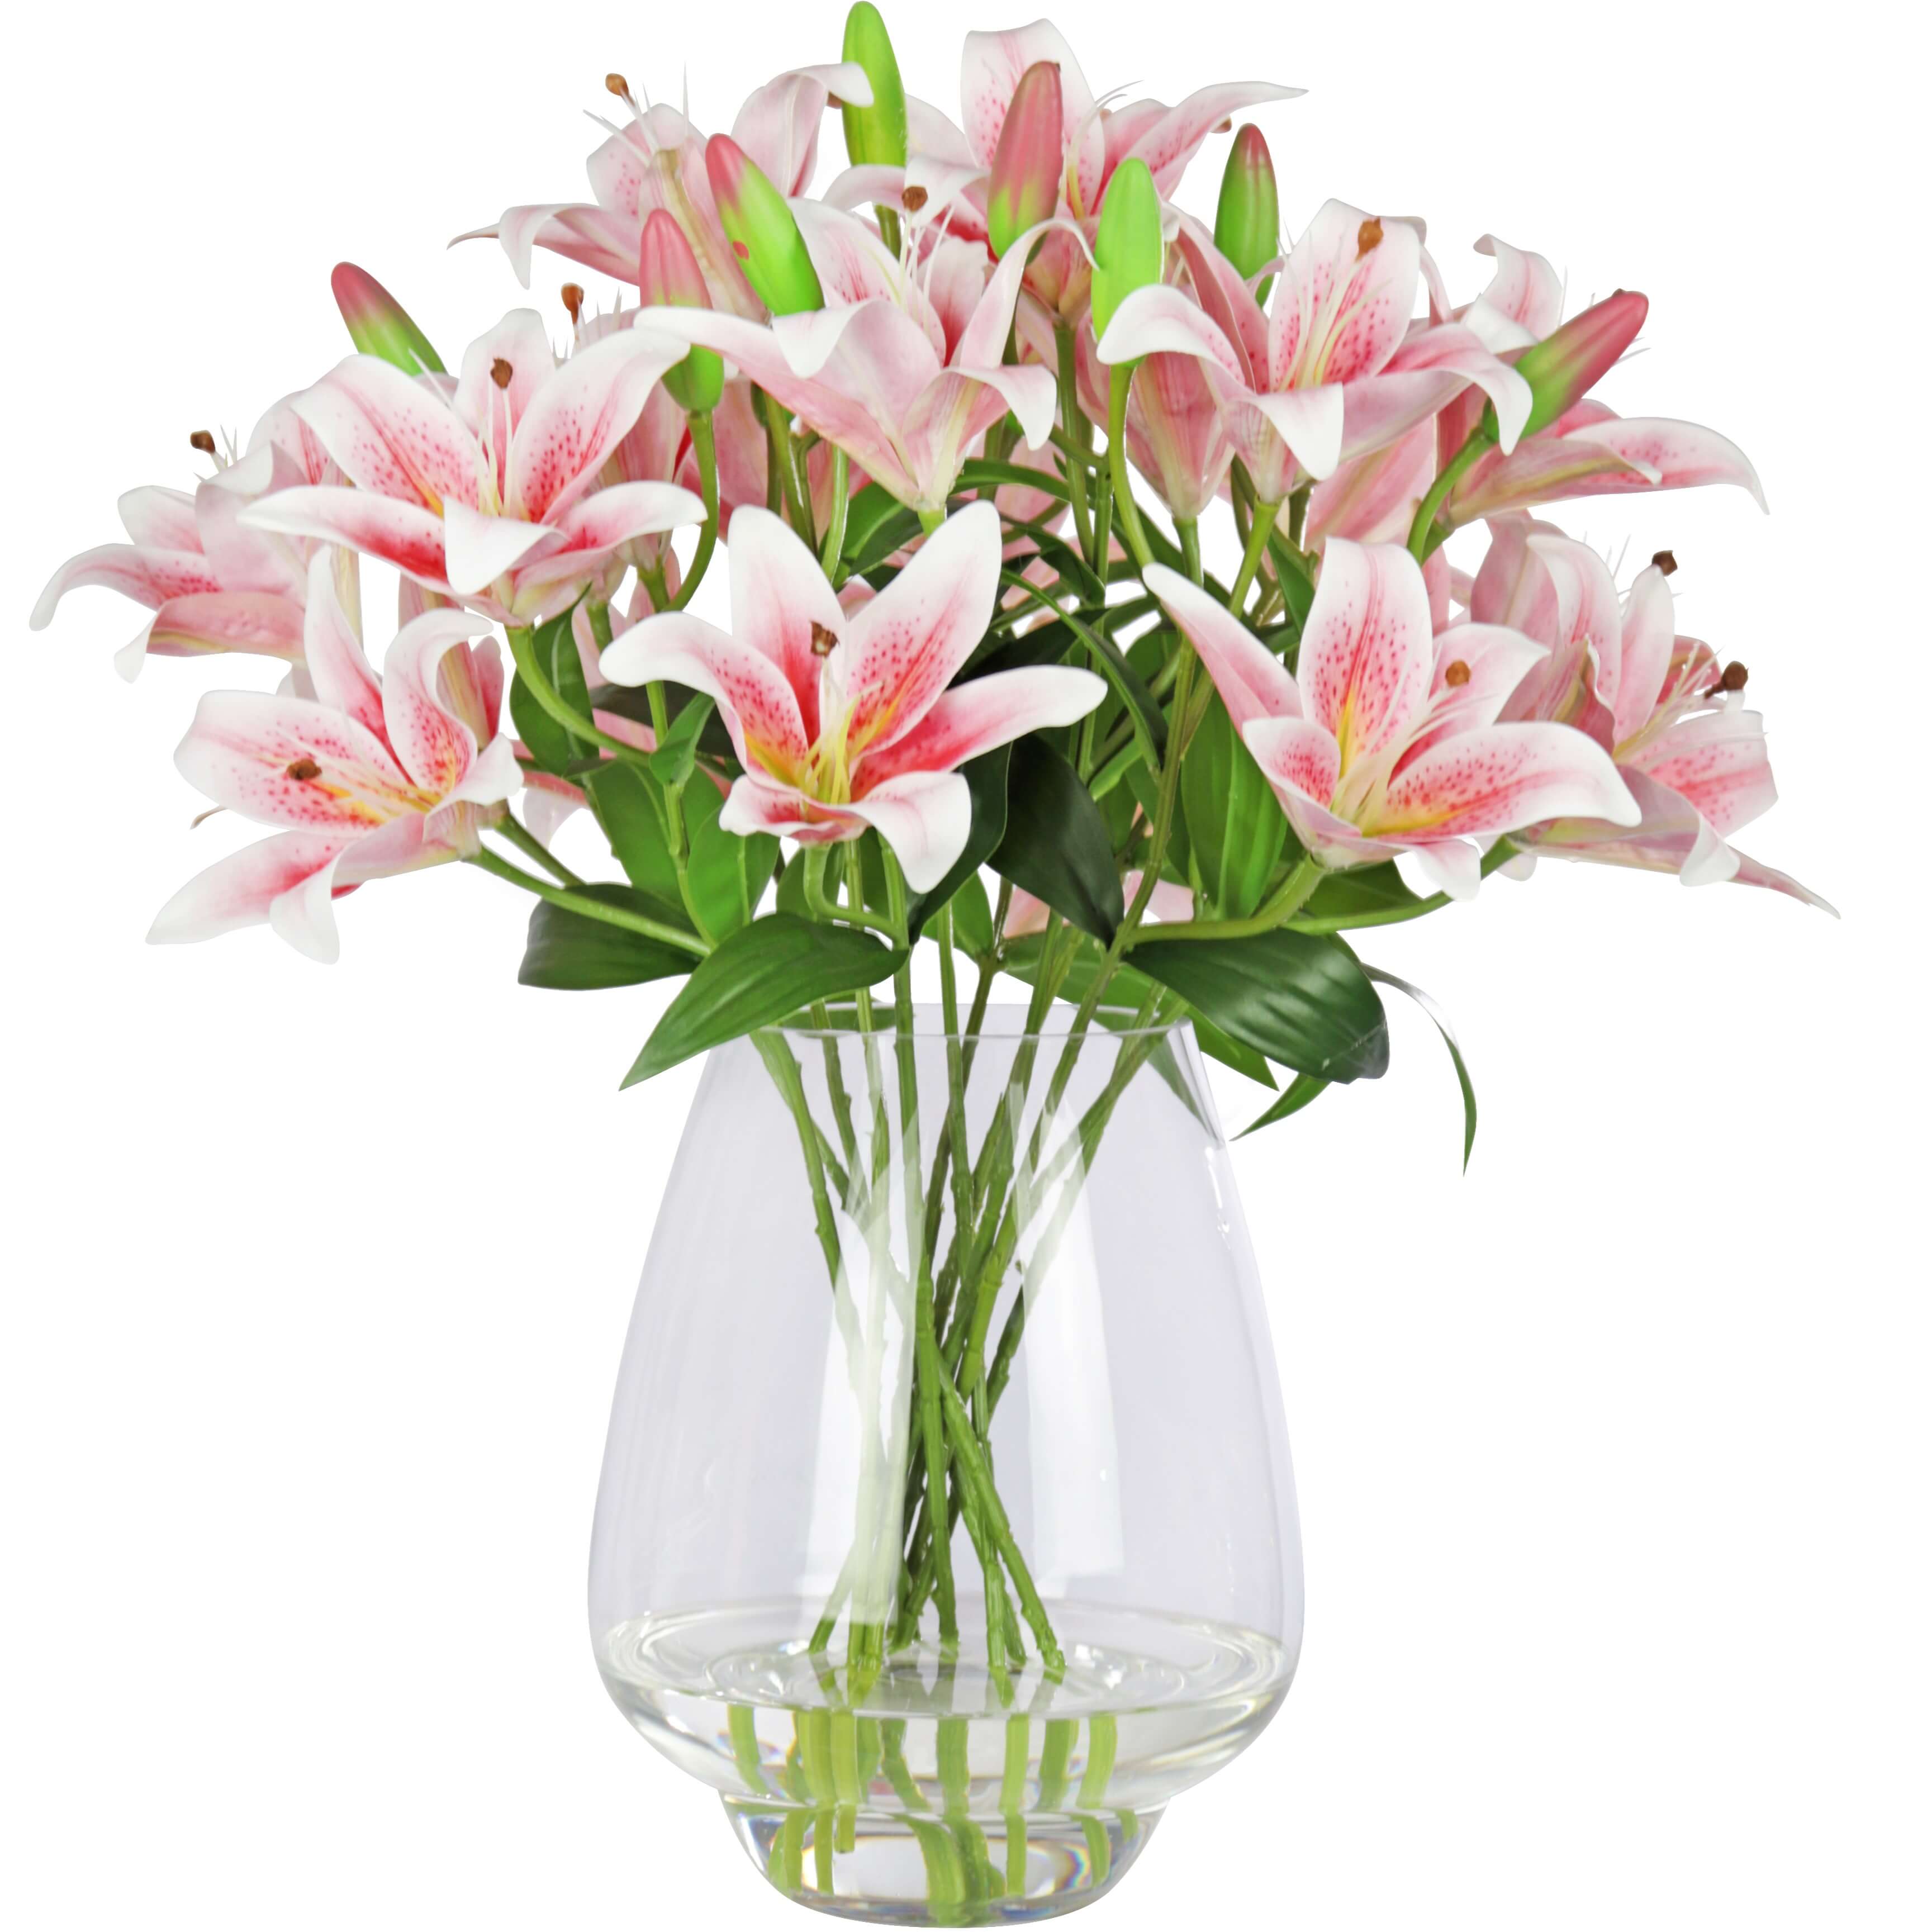 Artificial lily arrangements available online